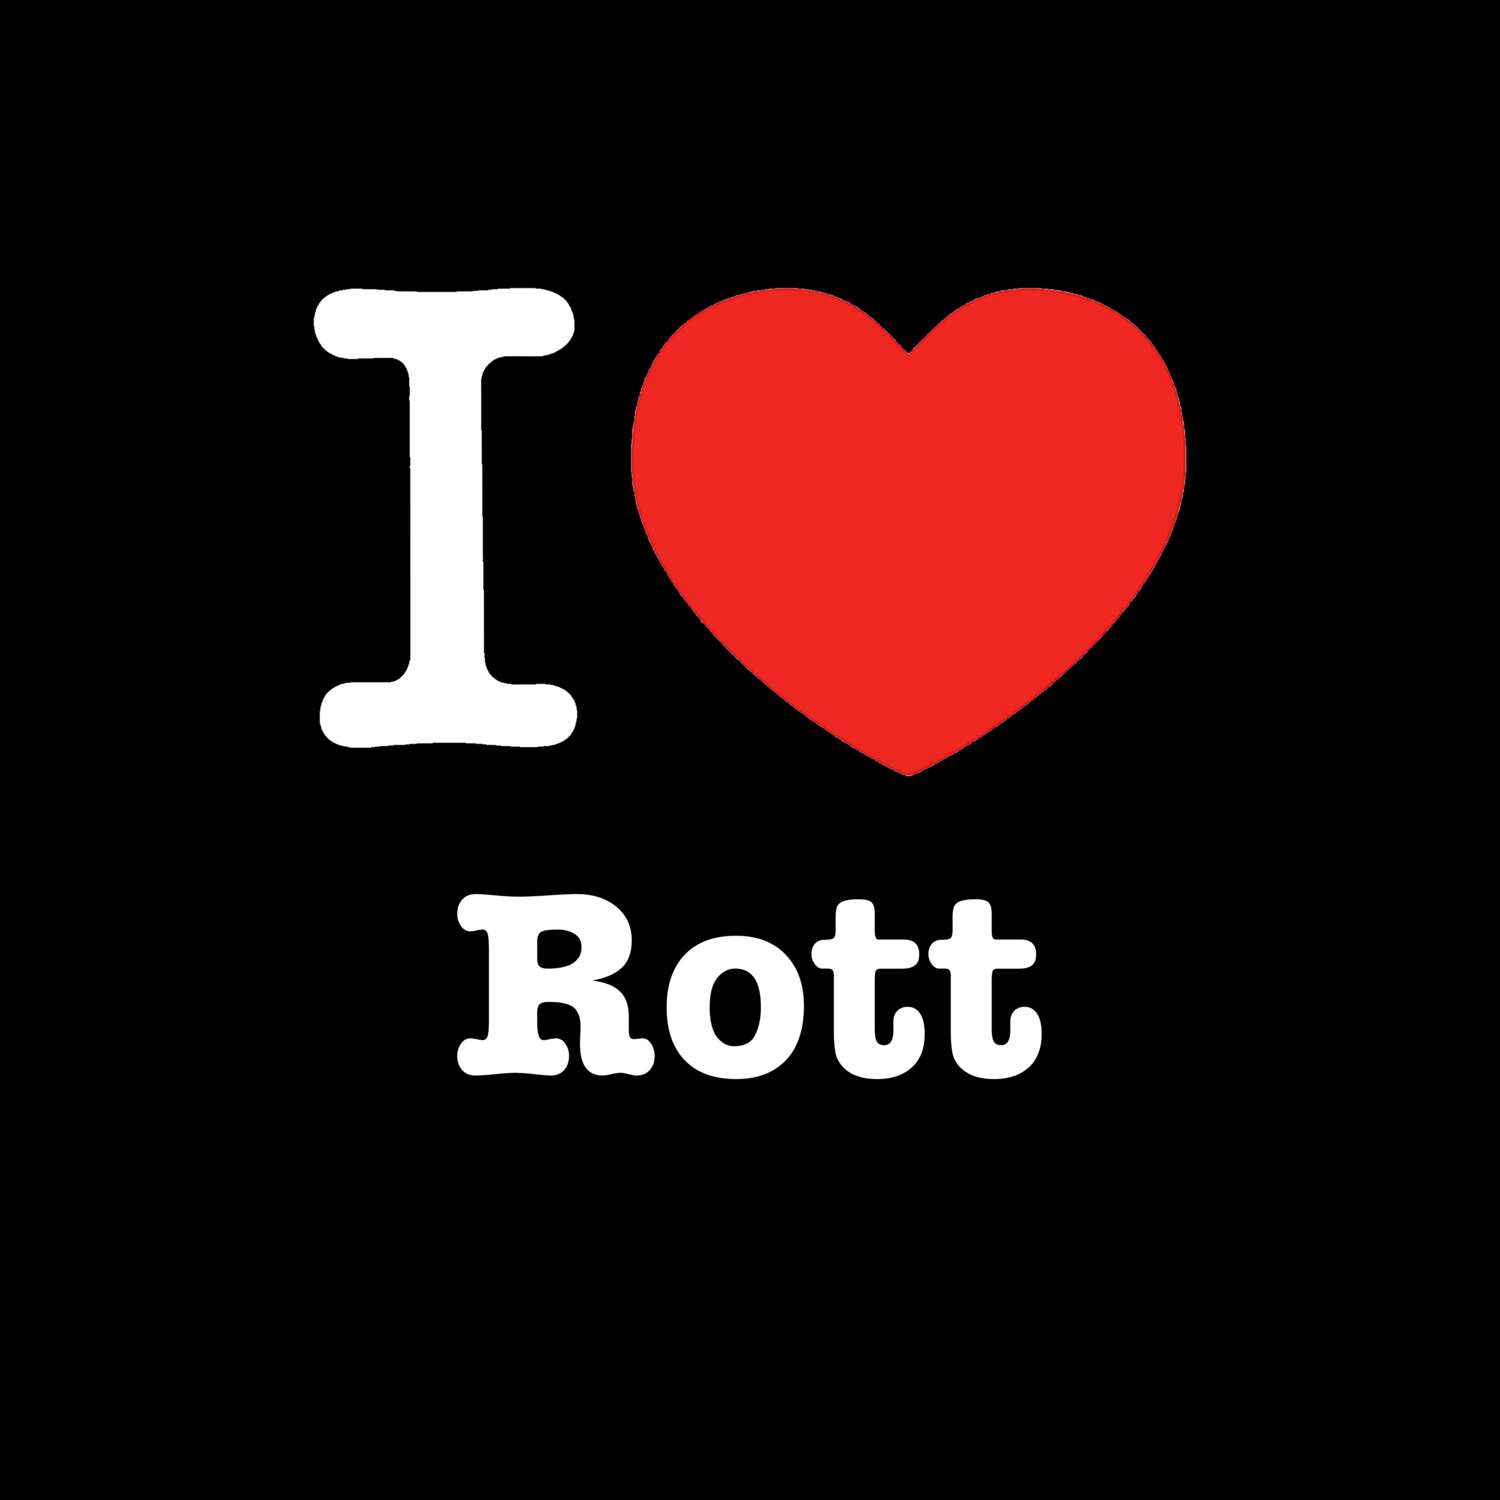 Rott T-Shirt »I love«